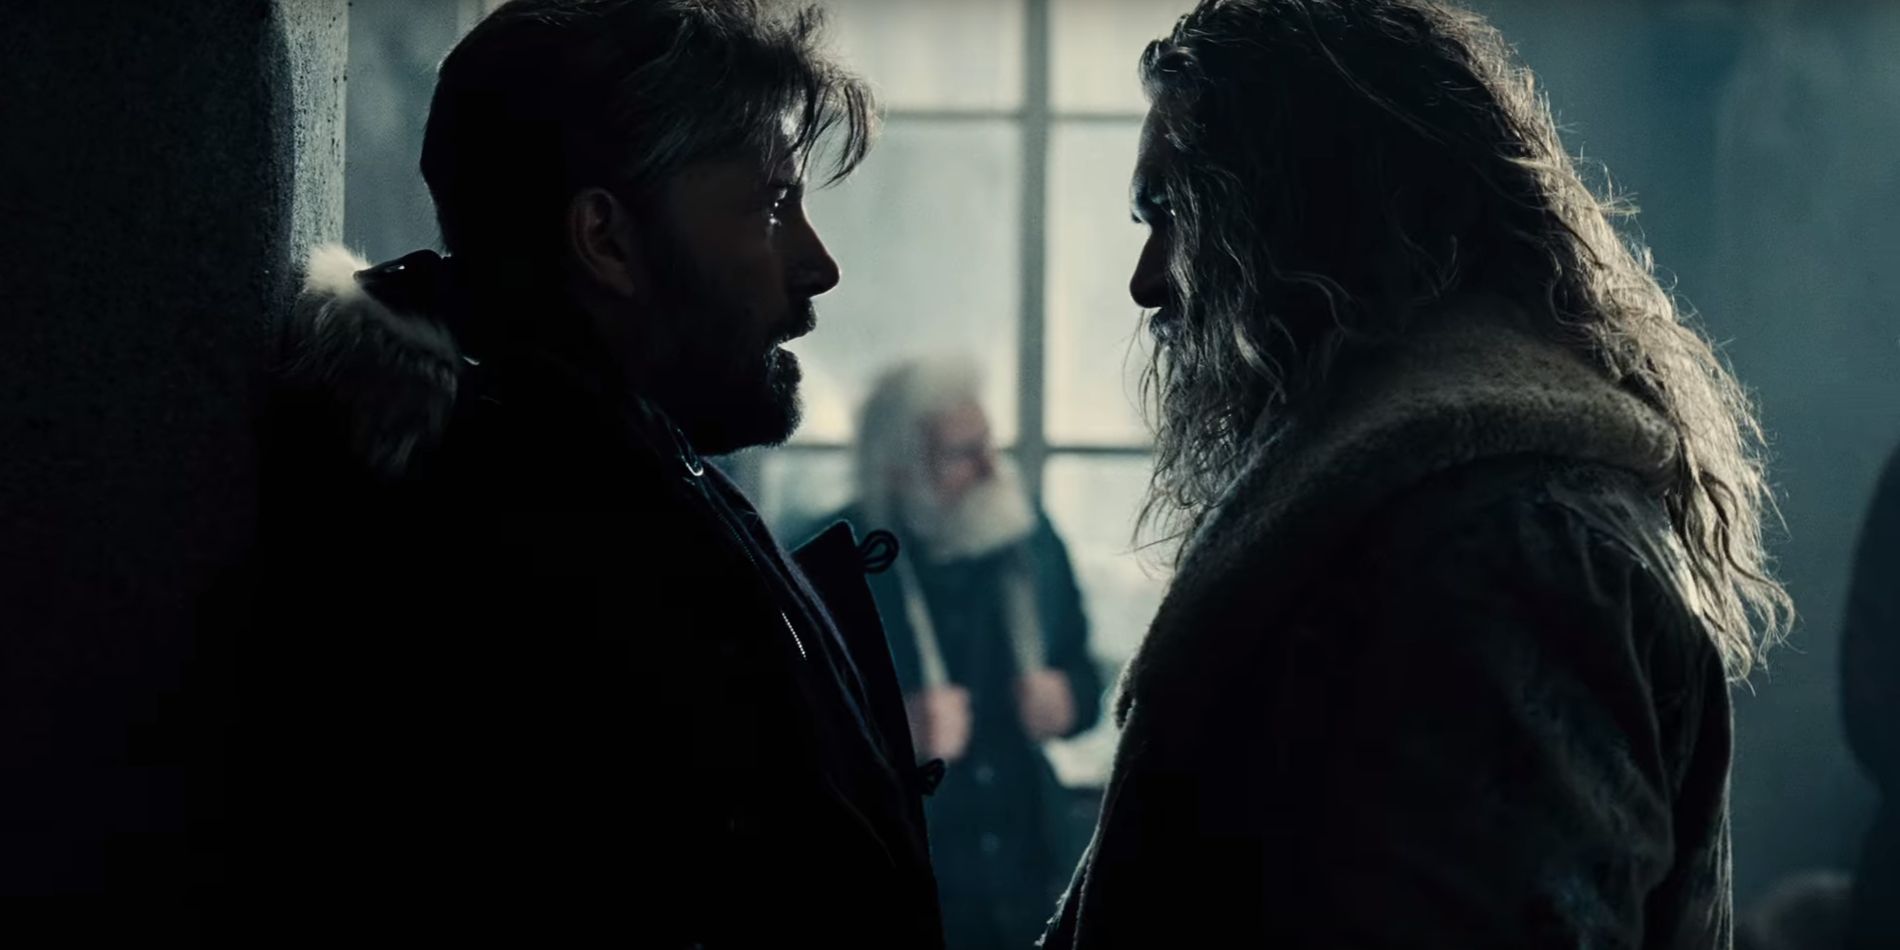 Bruce Wayne meets Aquaman in the Justice League trailer